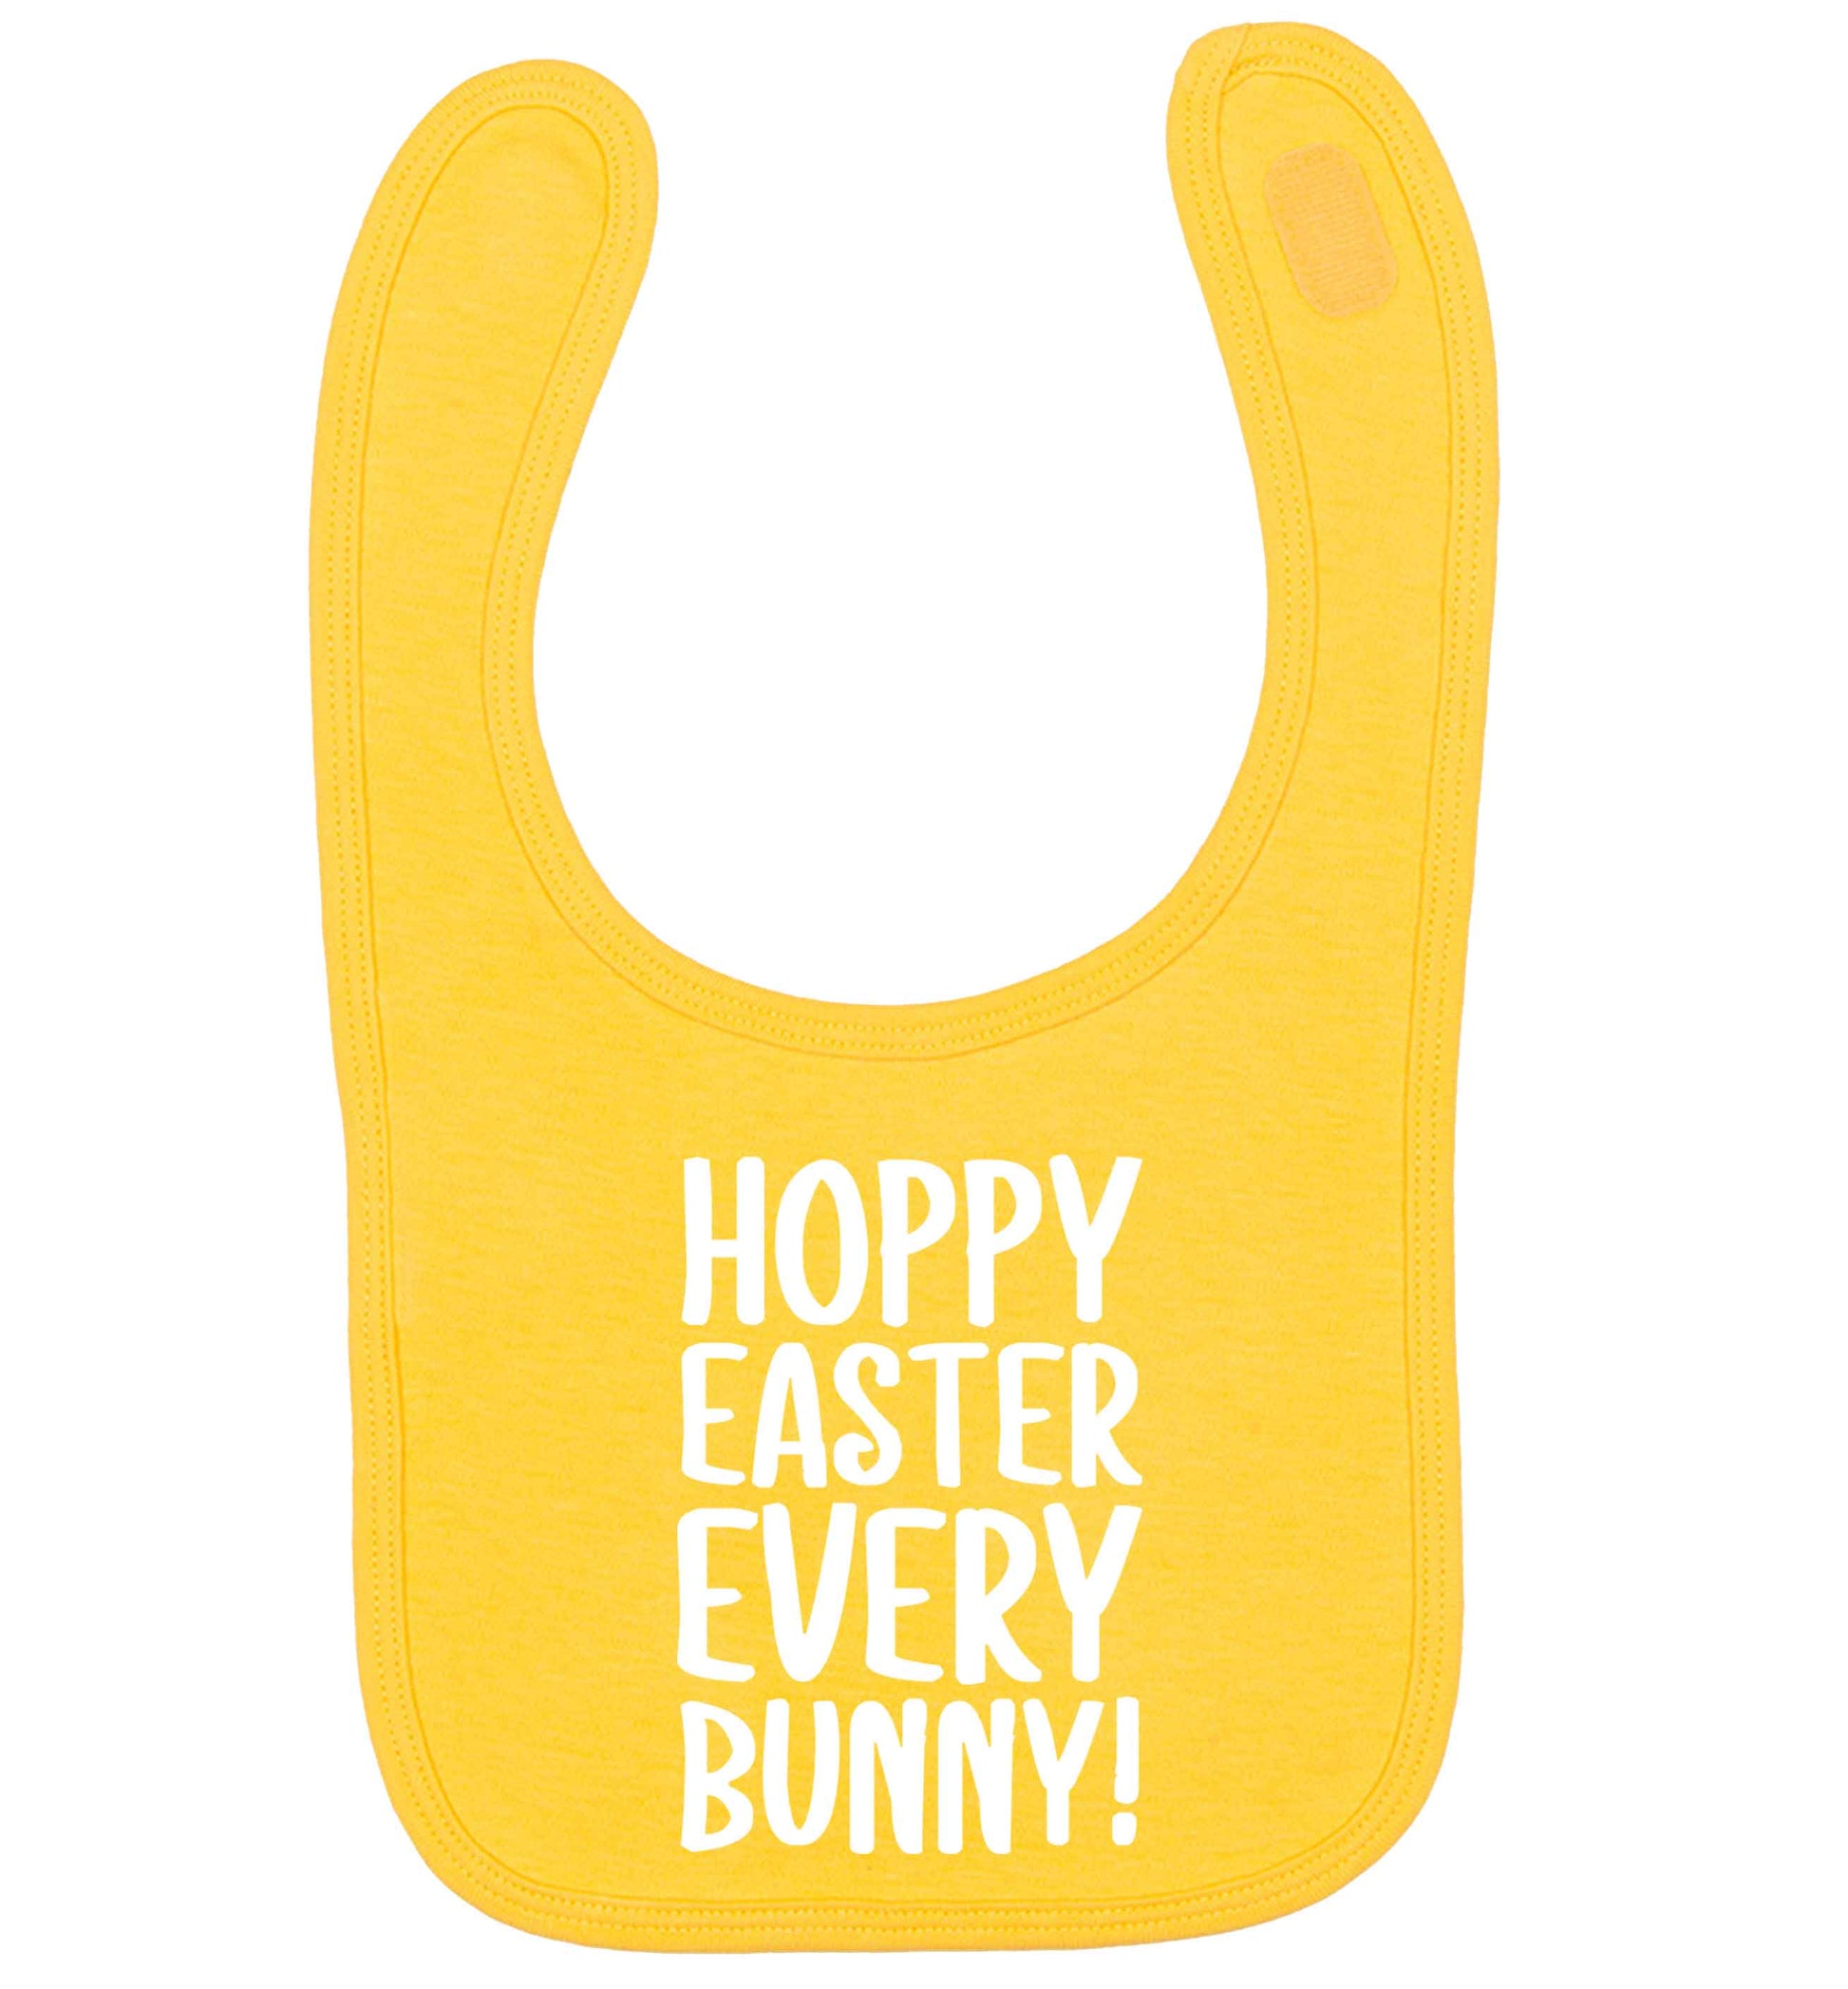 Hoppy Easter every bunny! yellow baby bib